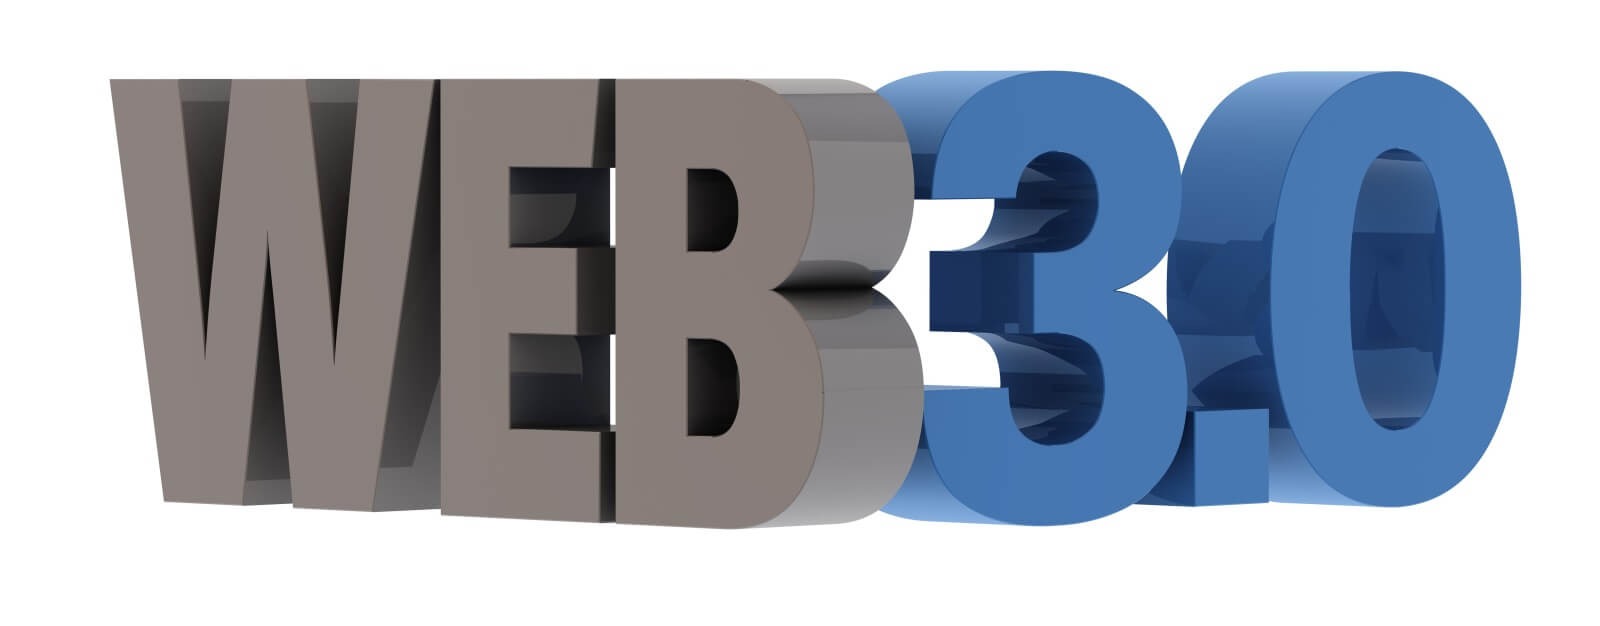 3.00 00. Web3. Веб 3.0. Web3 картинка. Web3 логотип.